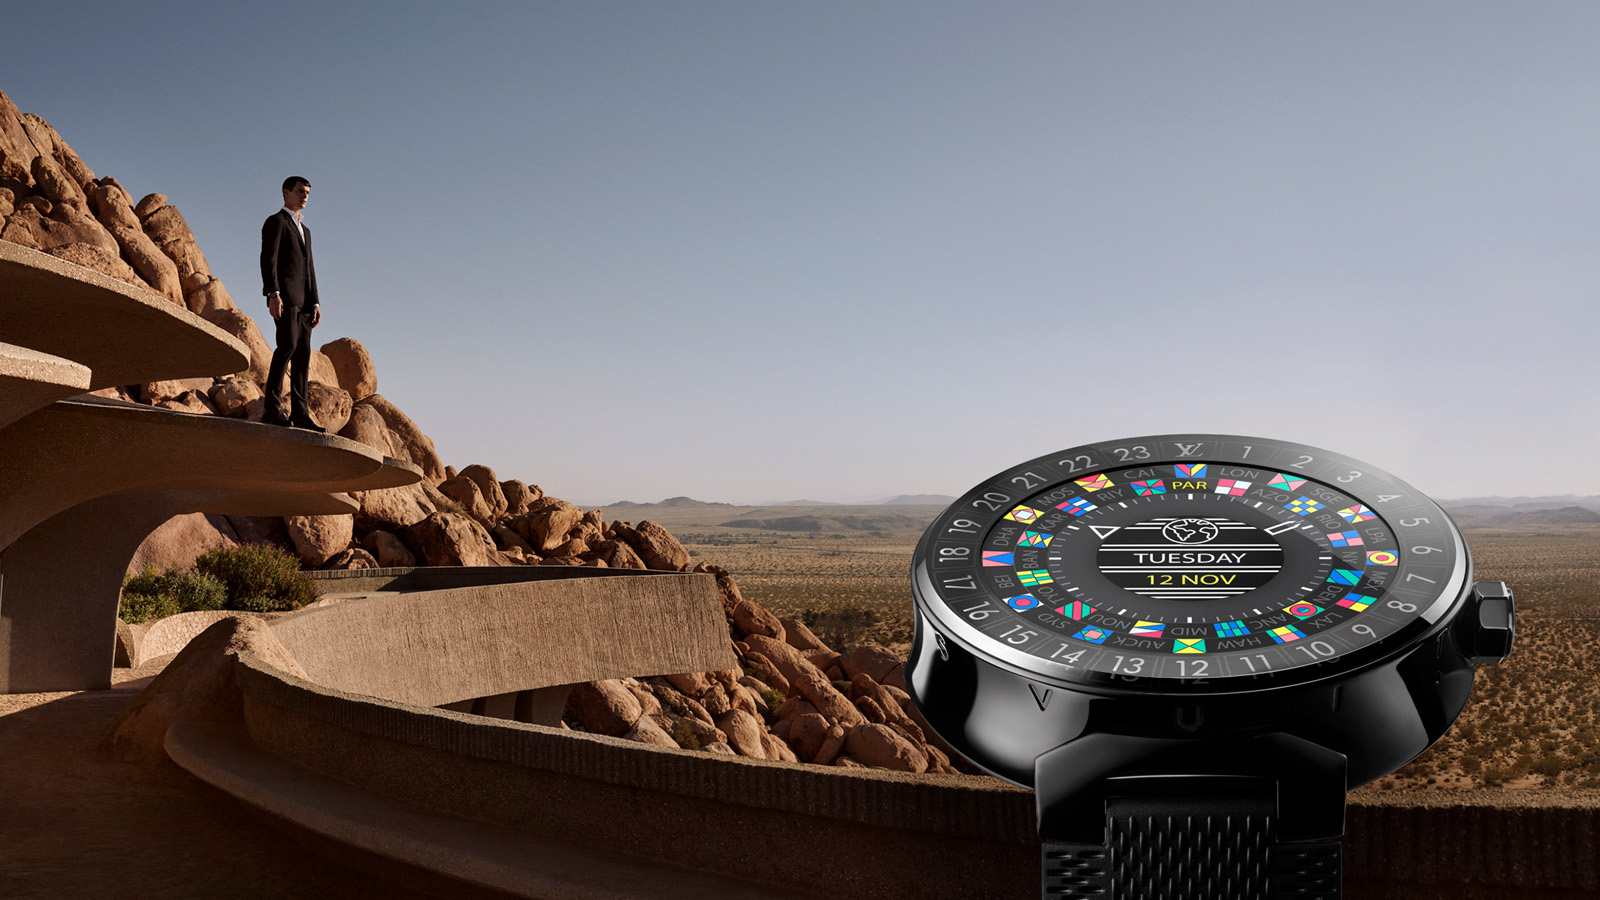 Louis Vuitton Unveils First Smartwatch Collection 'Tambour Horizon